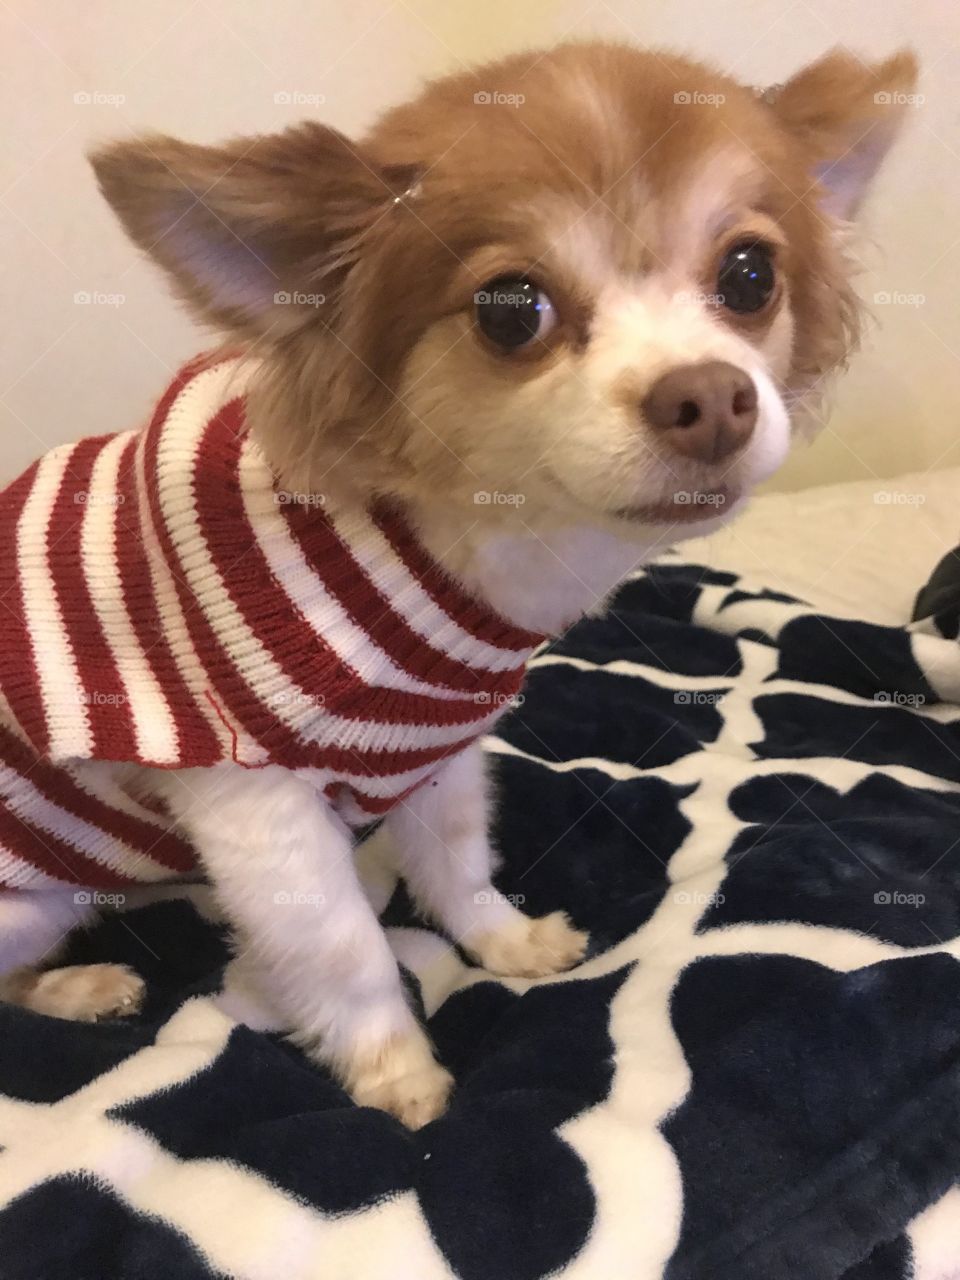 Christmas sweater dog 